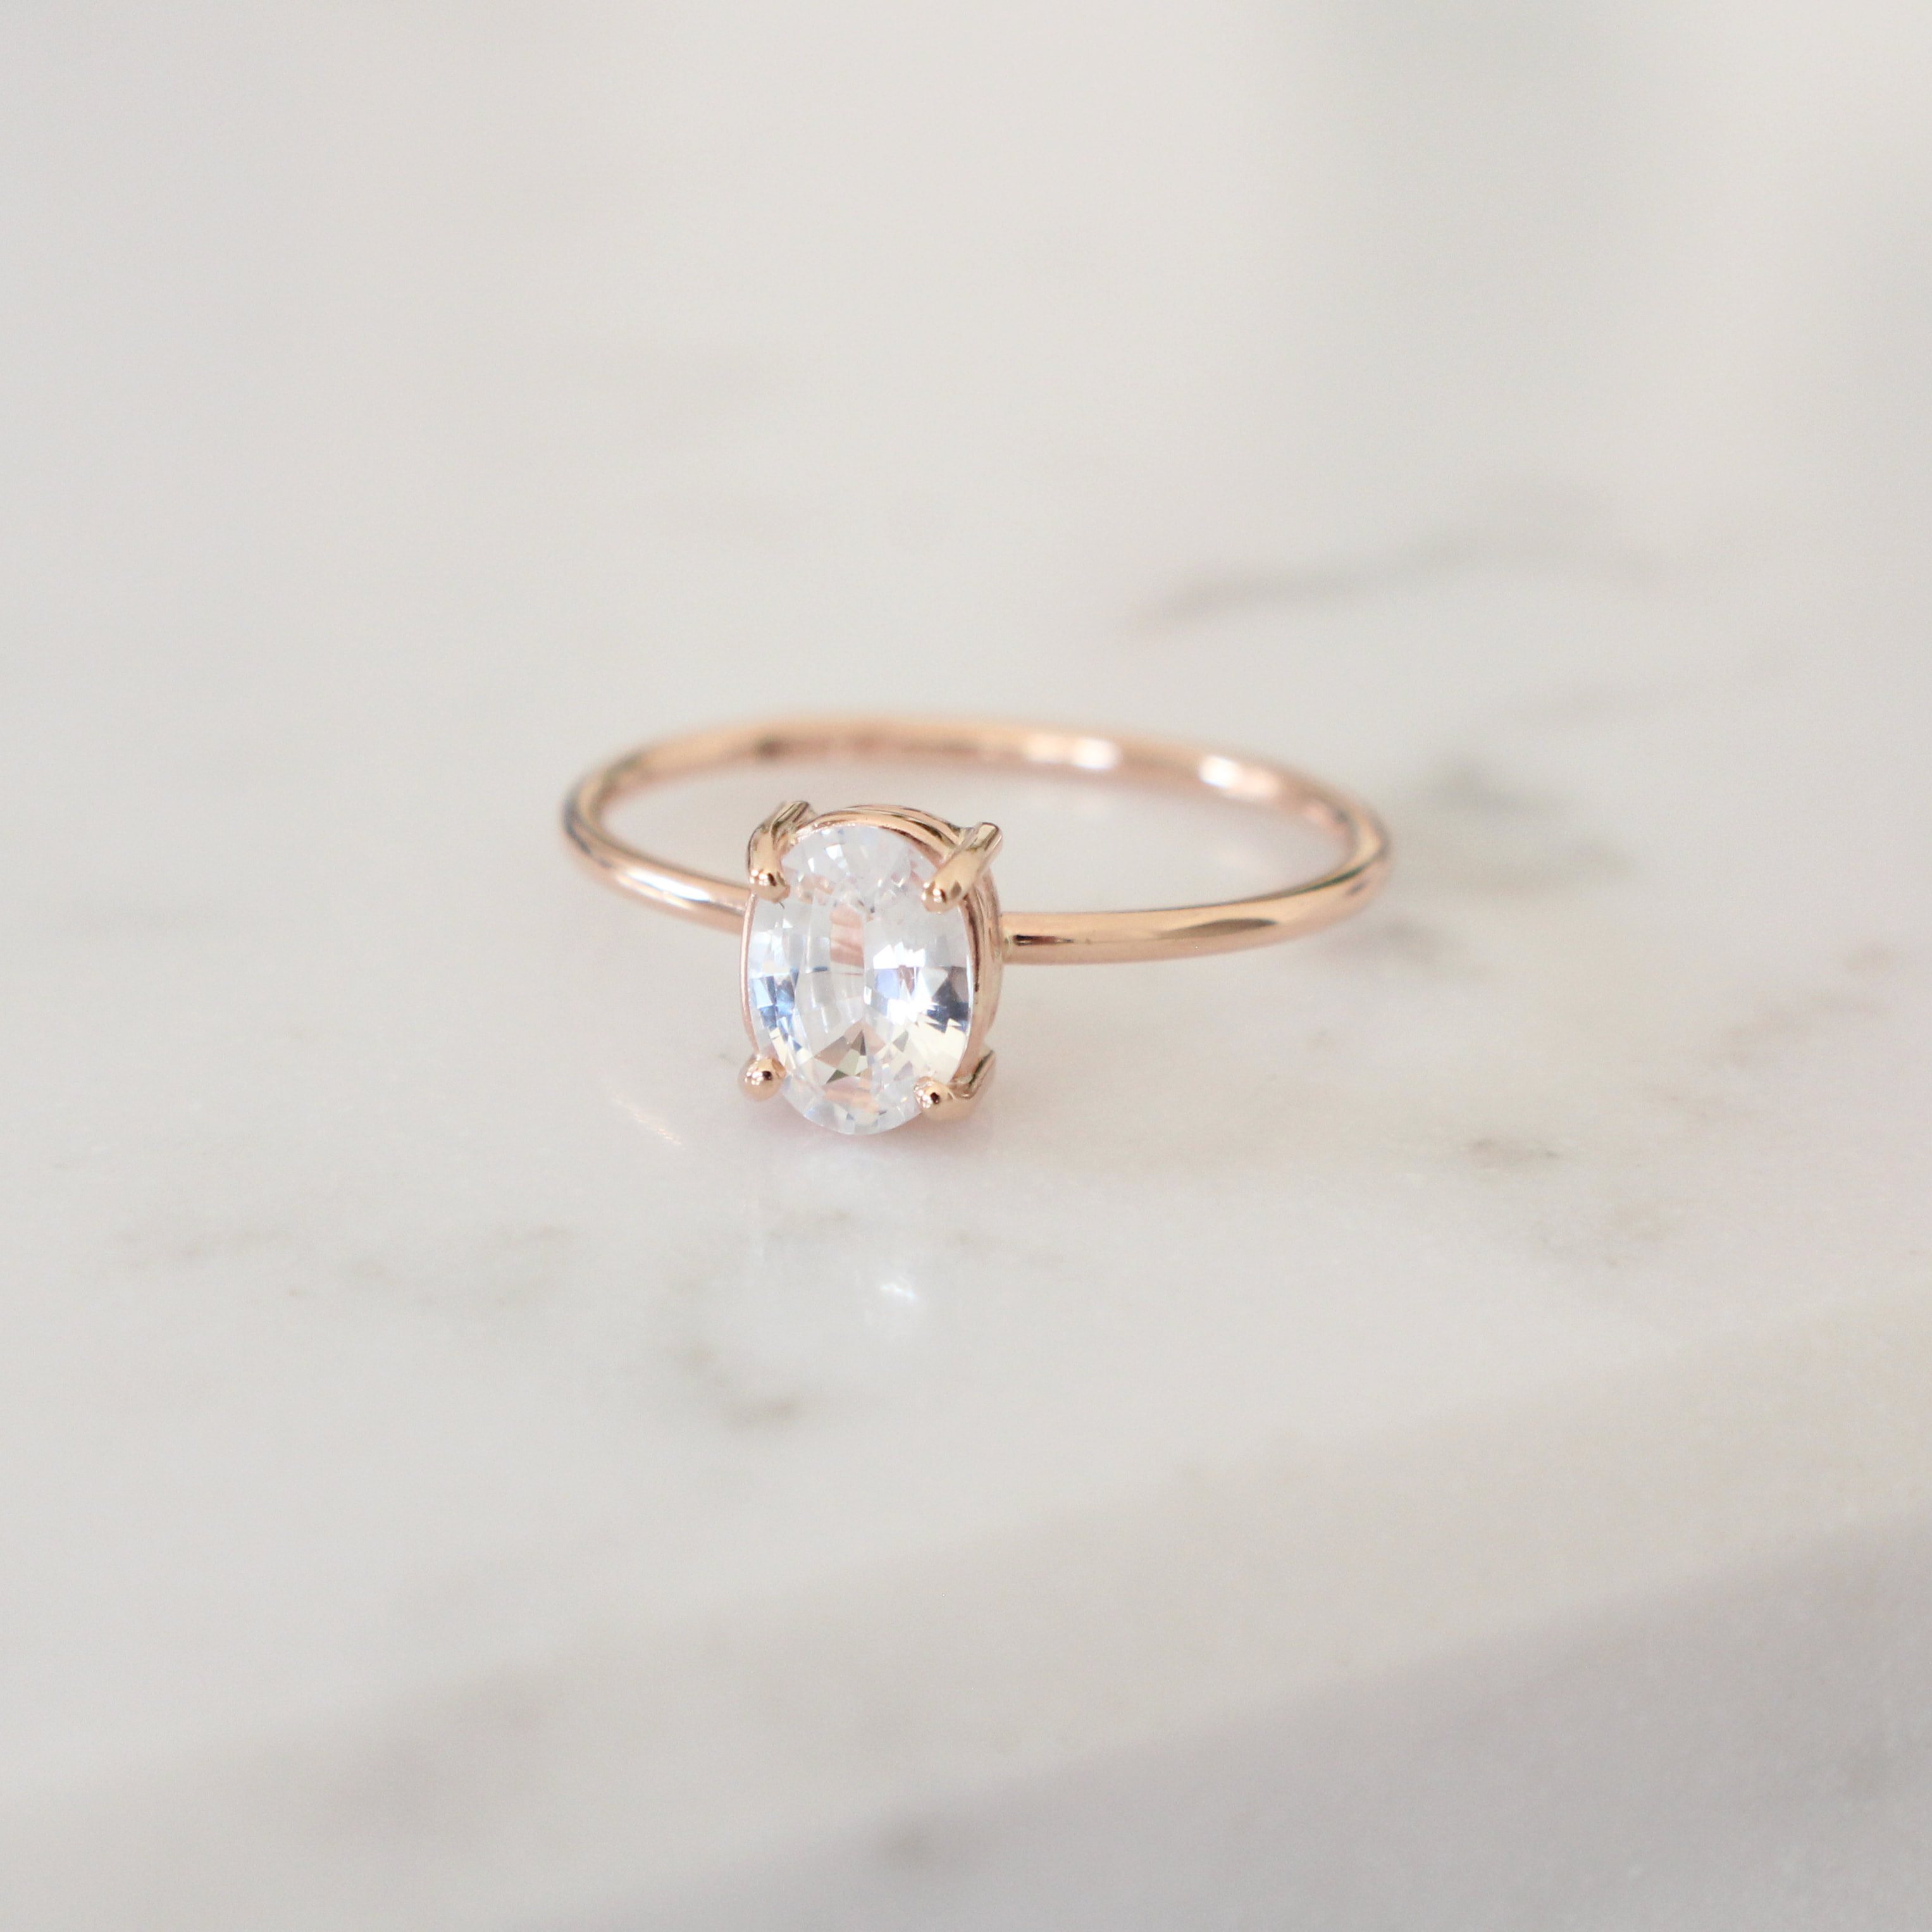 Elegant White Sapphire Ring with Halo Design - Size 7